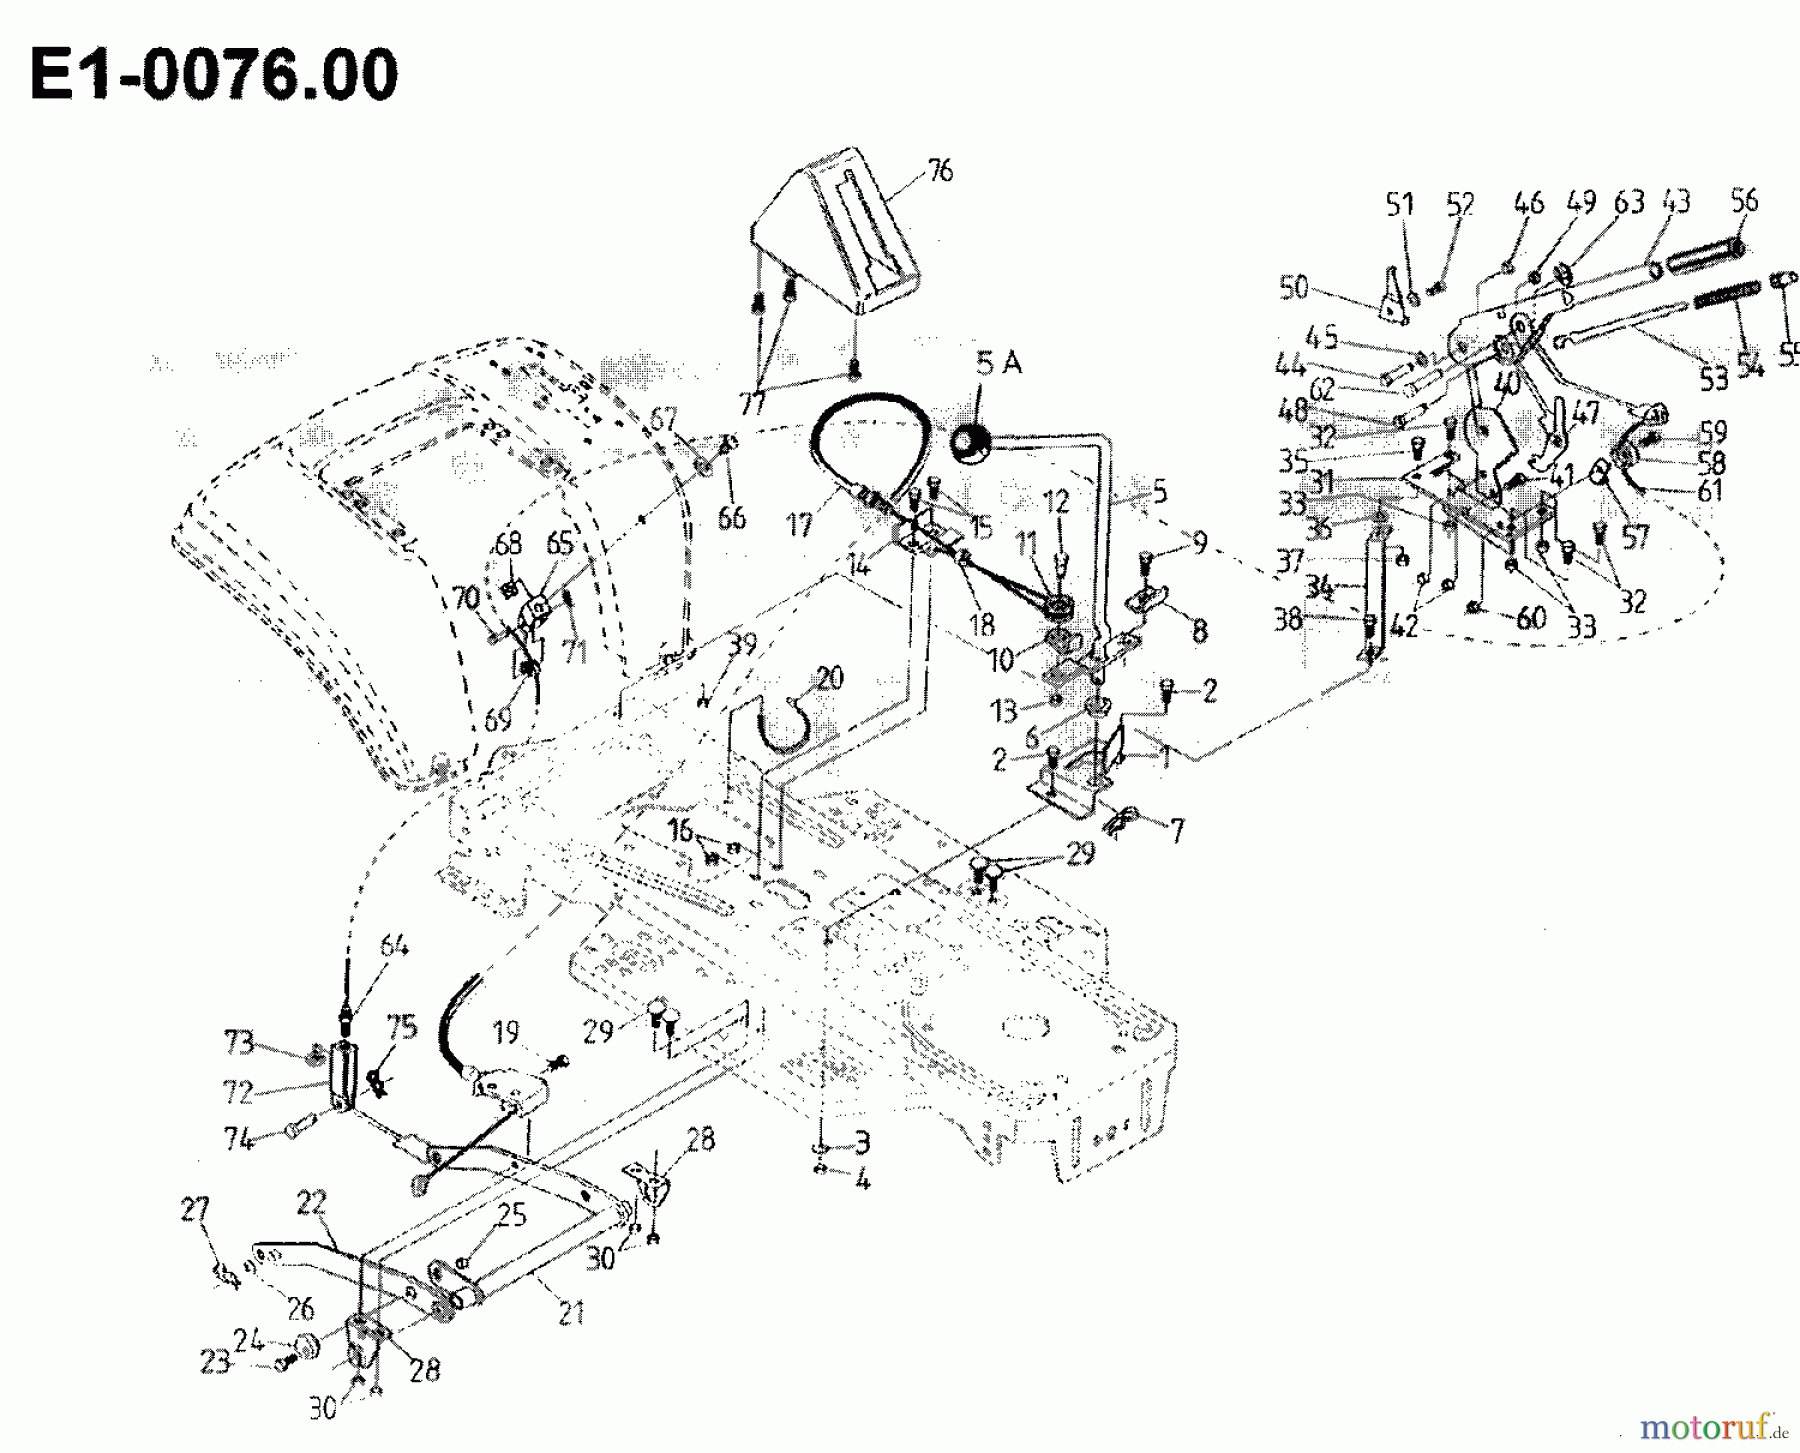  Gutbrod Rasentraktoren 1114 AWS 00097.01  (1992) Mähwerksaushebung